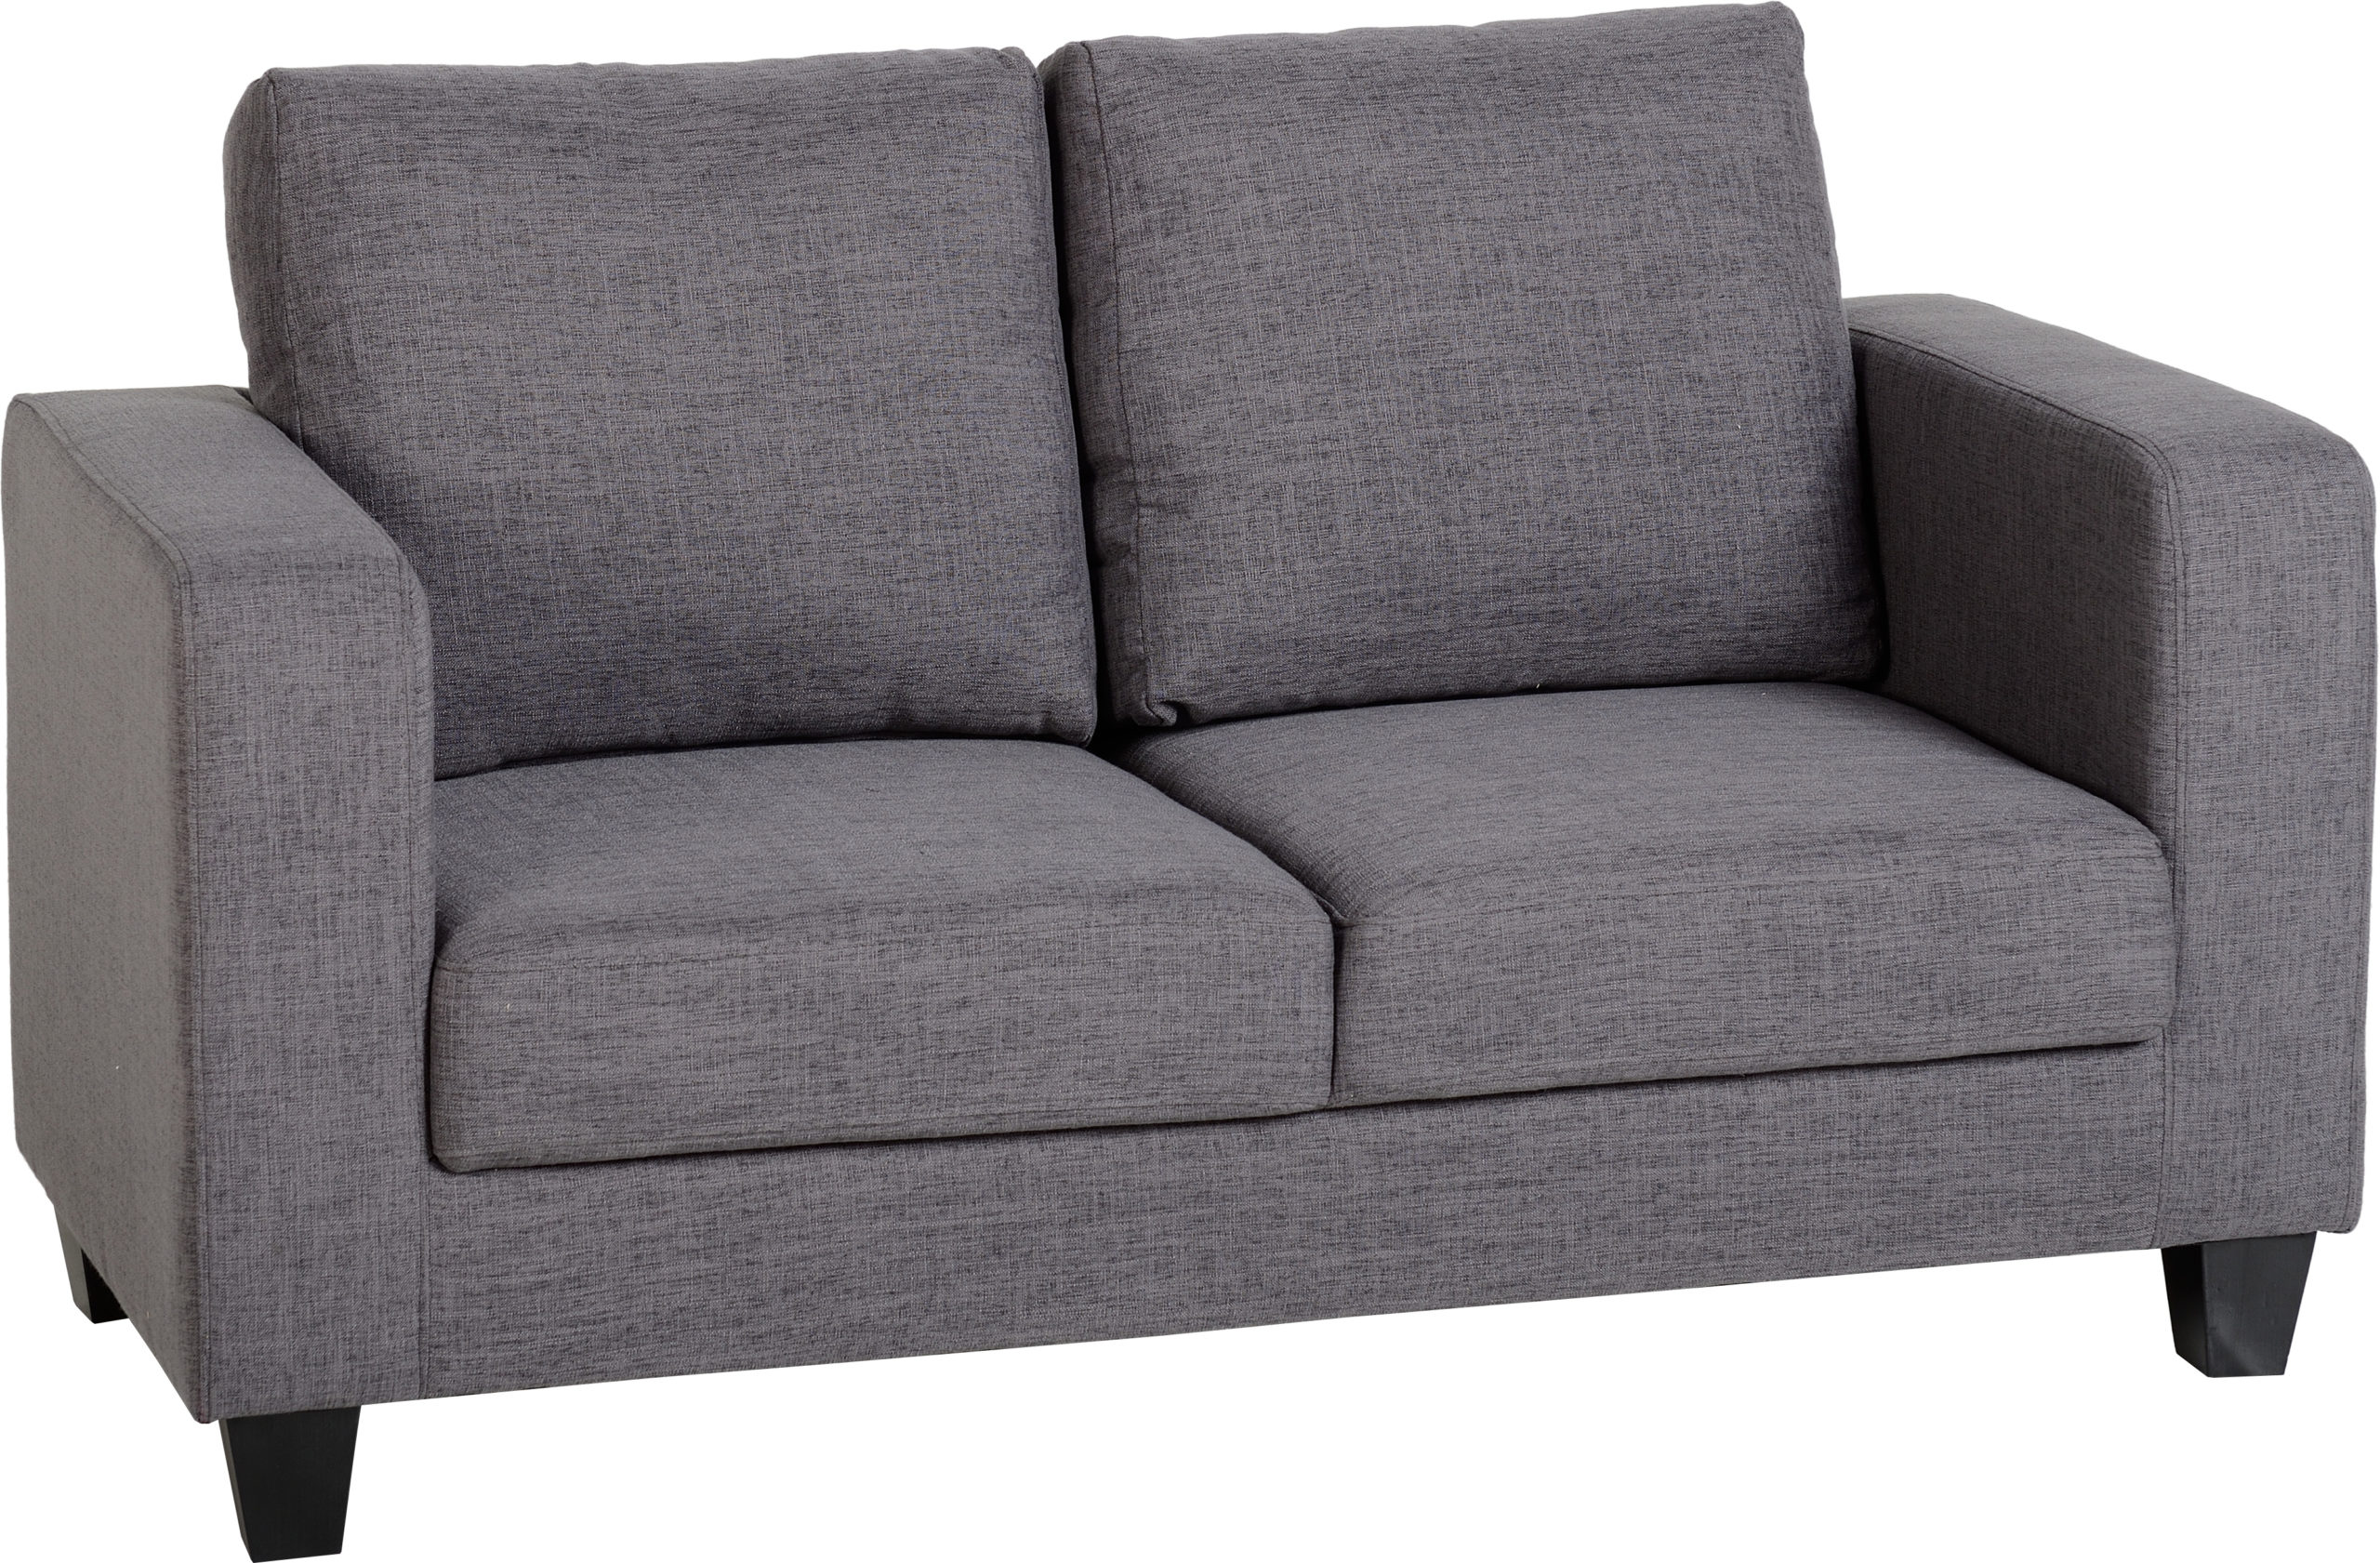 sofa bed lounge australia